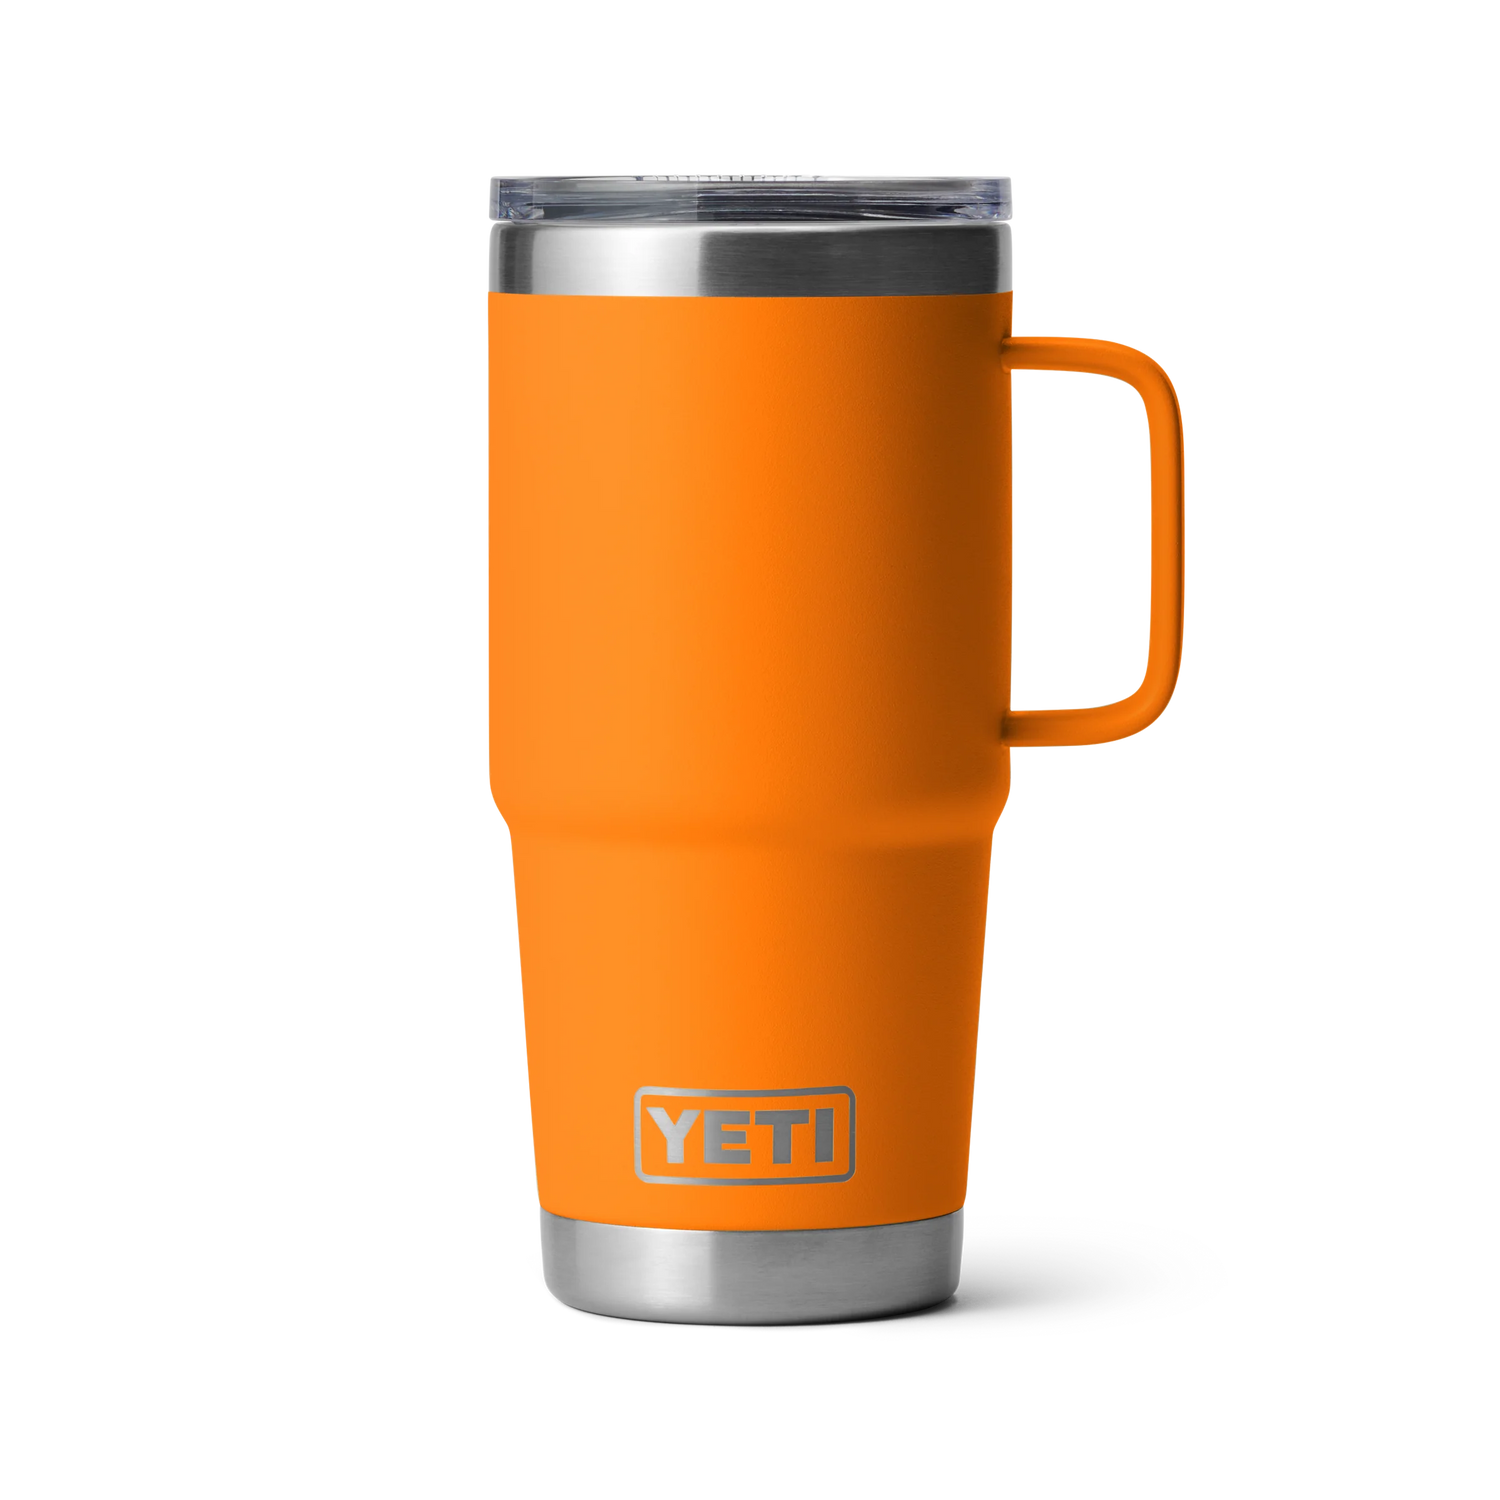 Yeti 20oz (591ml) Travel Mug with Stronghold Lid-Coolers & Drinkware-Yeti-King Crab Orange-Fishing Station